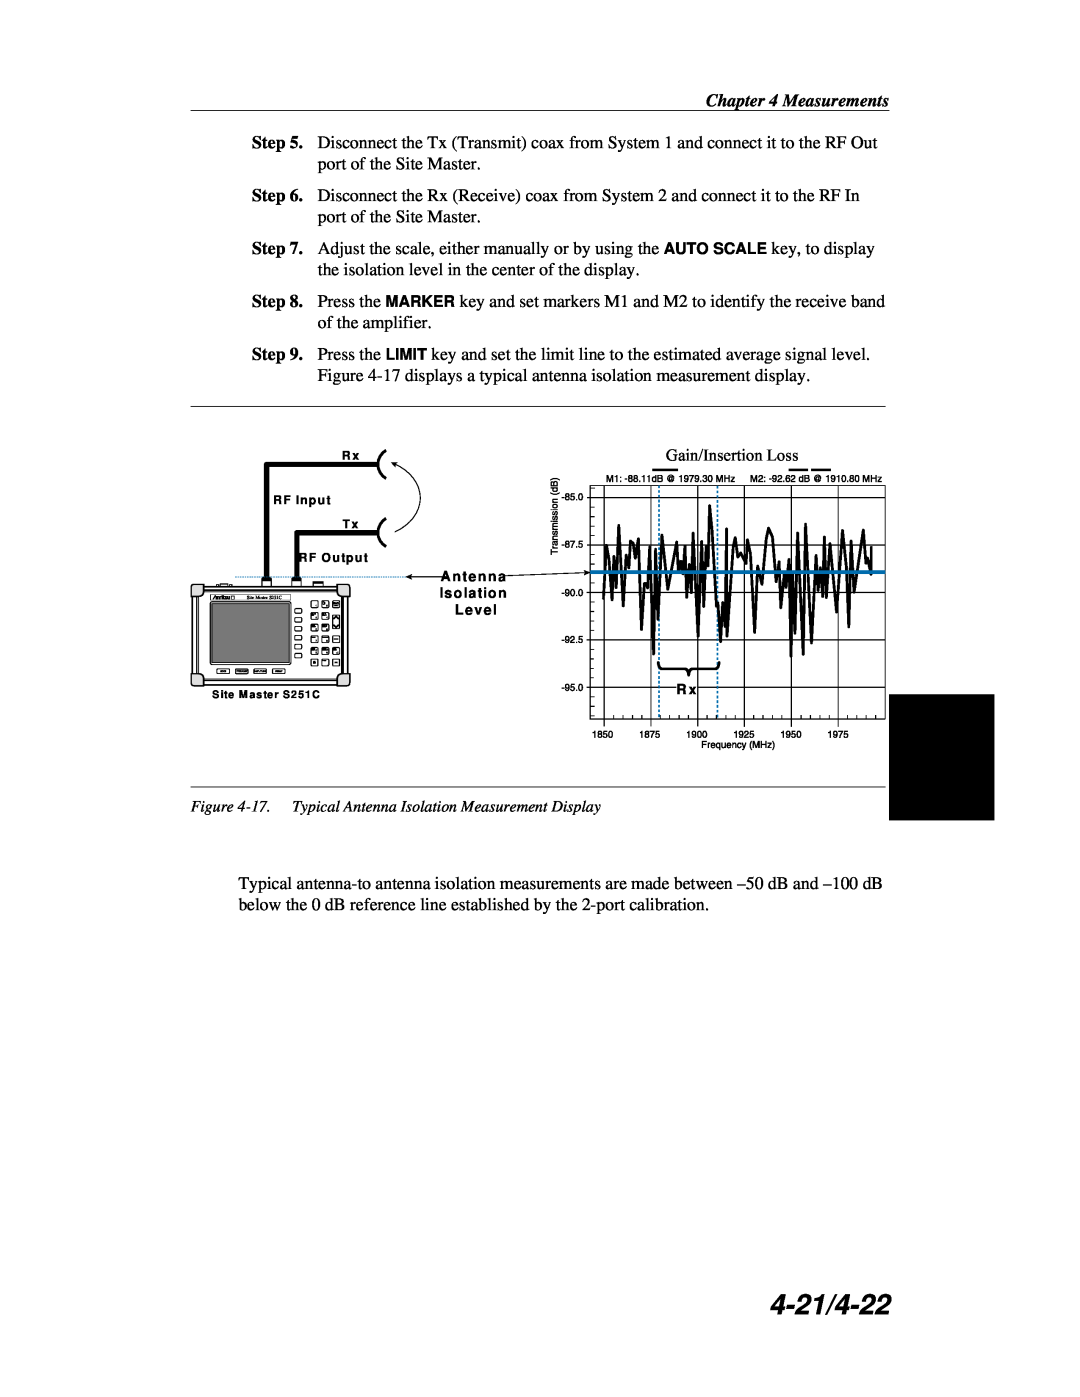 Anritsu S251C manual 4-21/4-22, Gain/Insertion Loss, L ev el, Measurements 